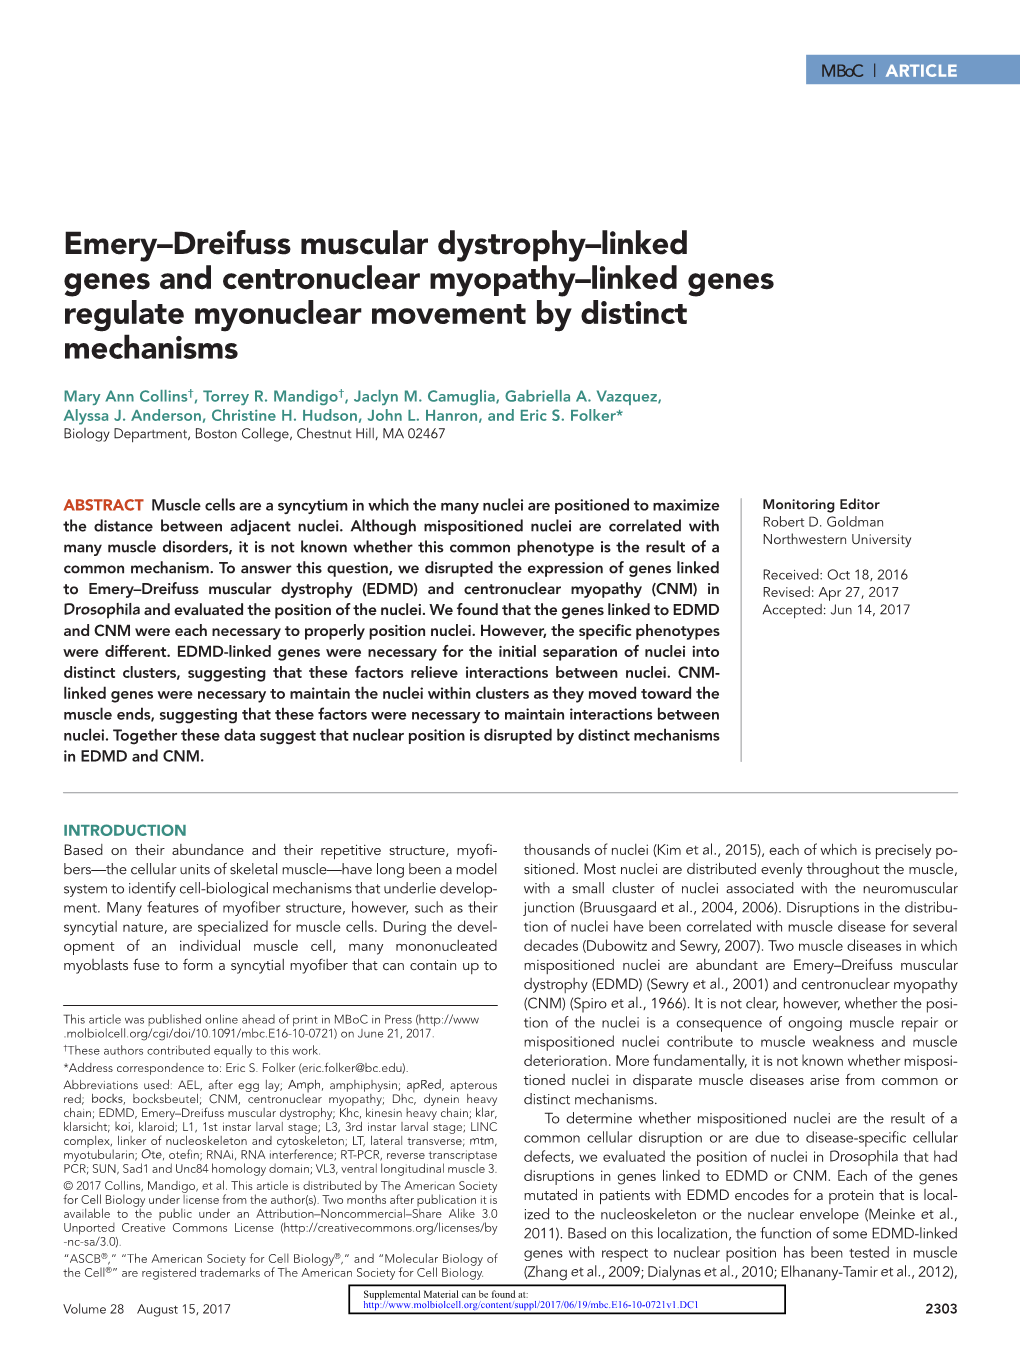 Emery–Dreifuss Muscular Dystrophy–Linked Genes and Centronuclear Myopathy–Linked Genes Regulate Myonuclear Movement by Distinct Mechanisms